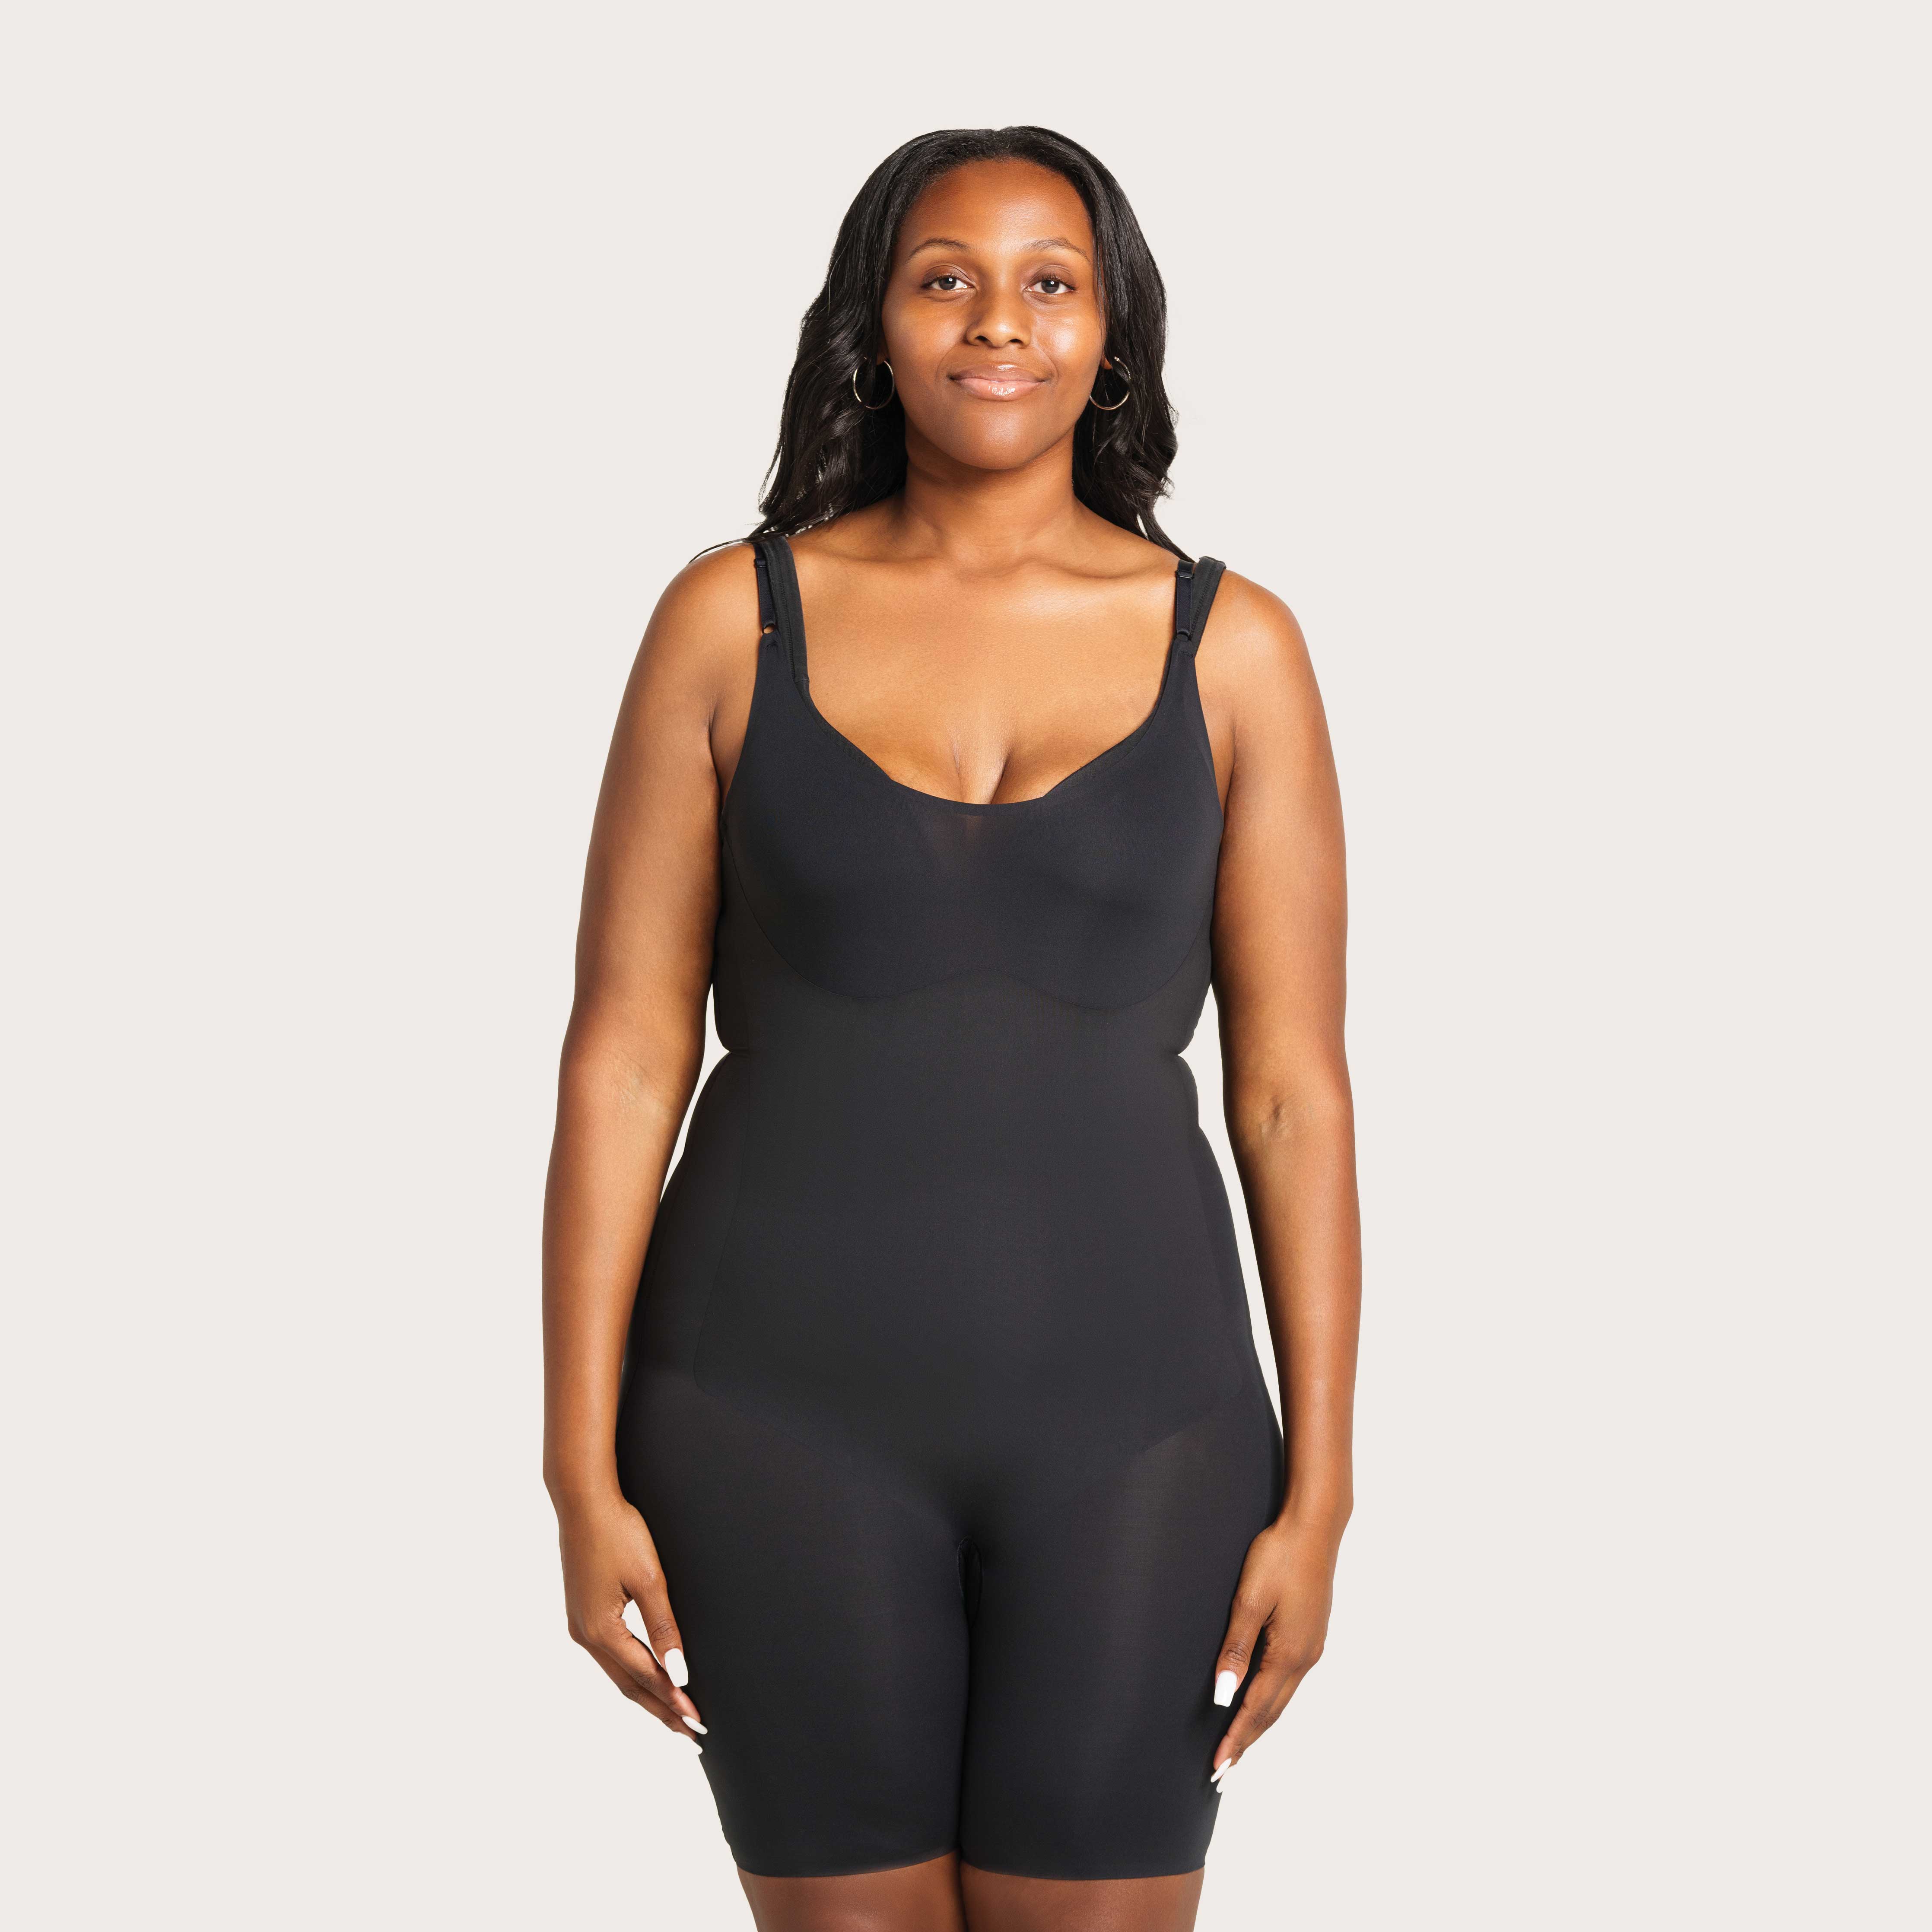 JDEFEG Bodysuit for Women Strapless High Compression Body